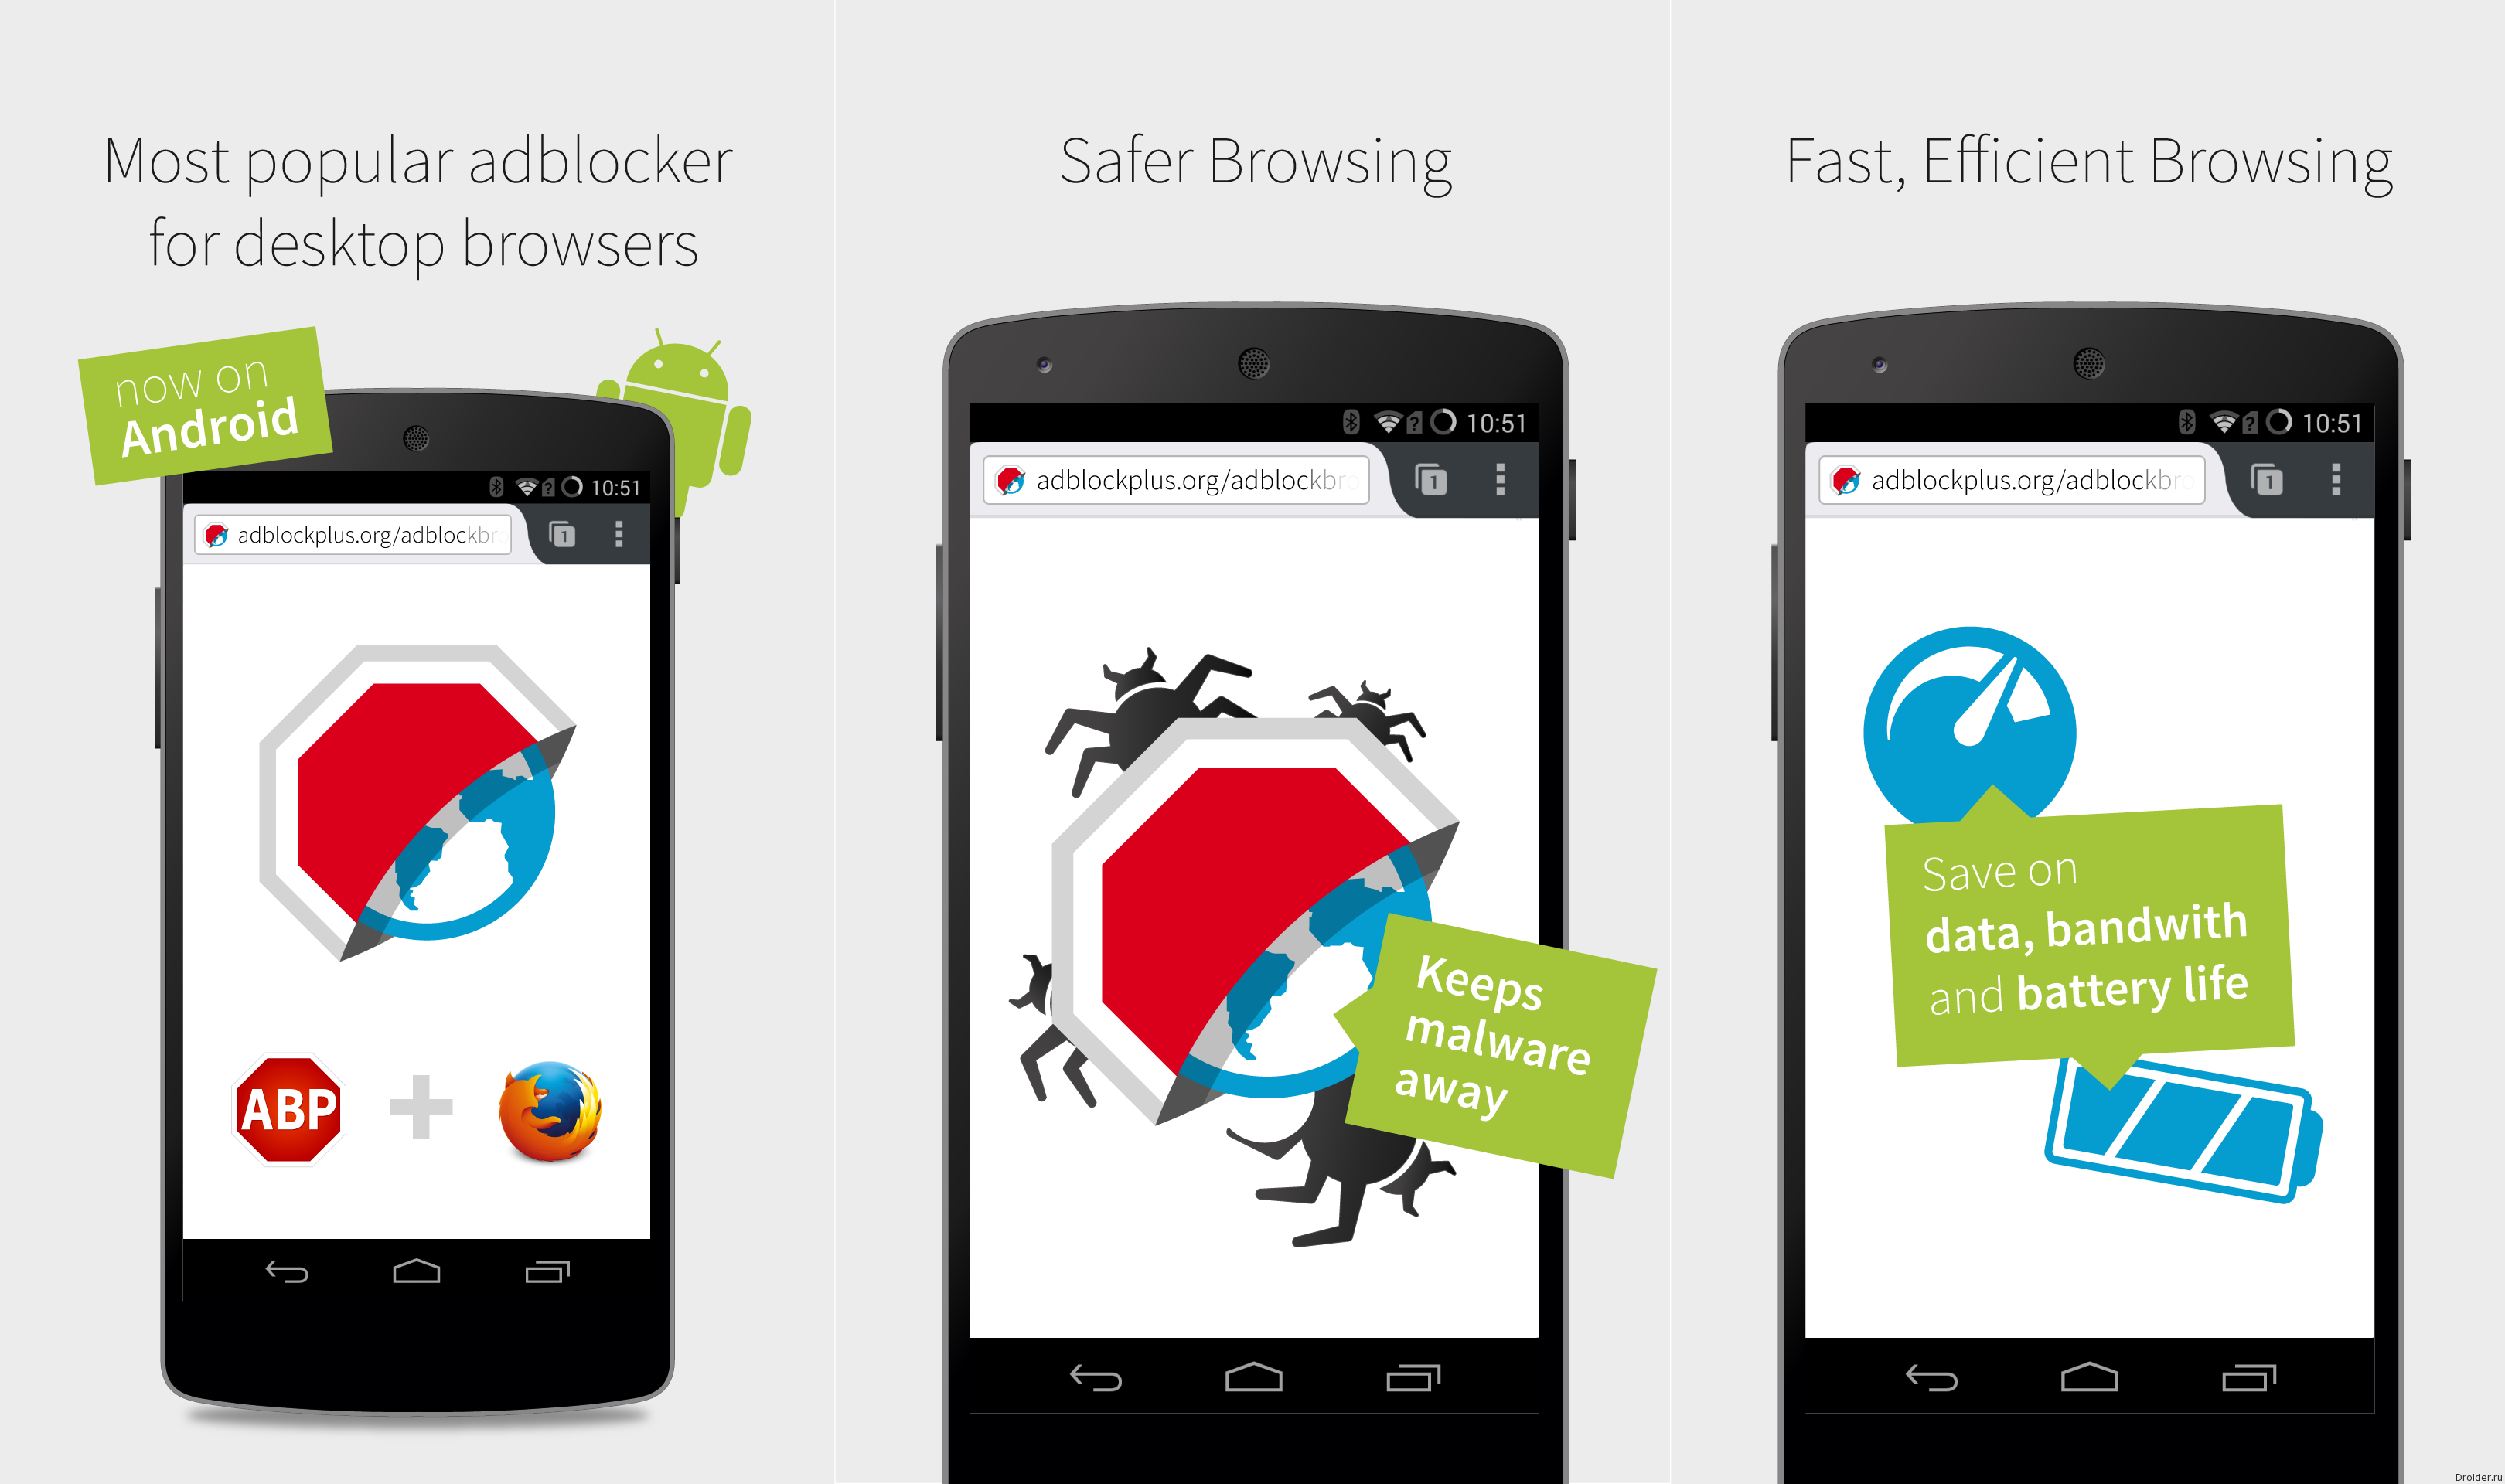 AdBlock Browser